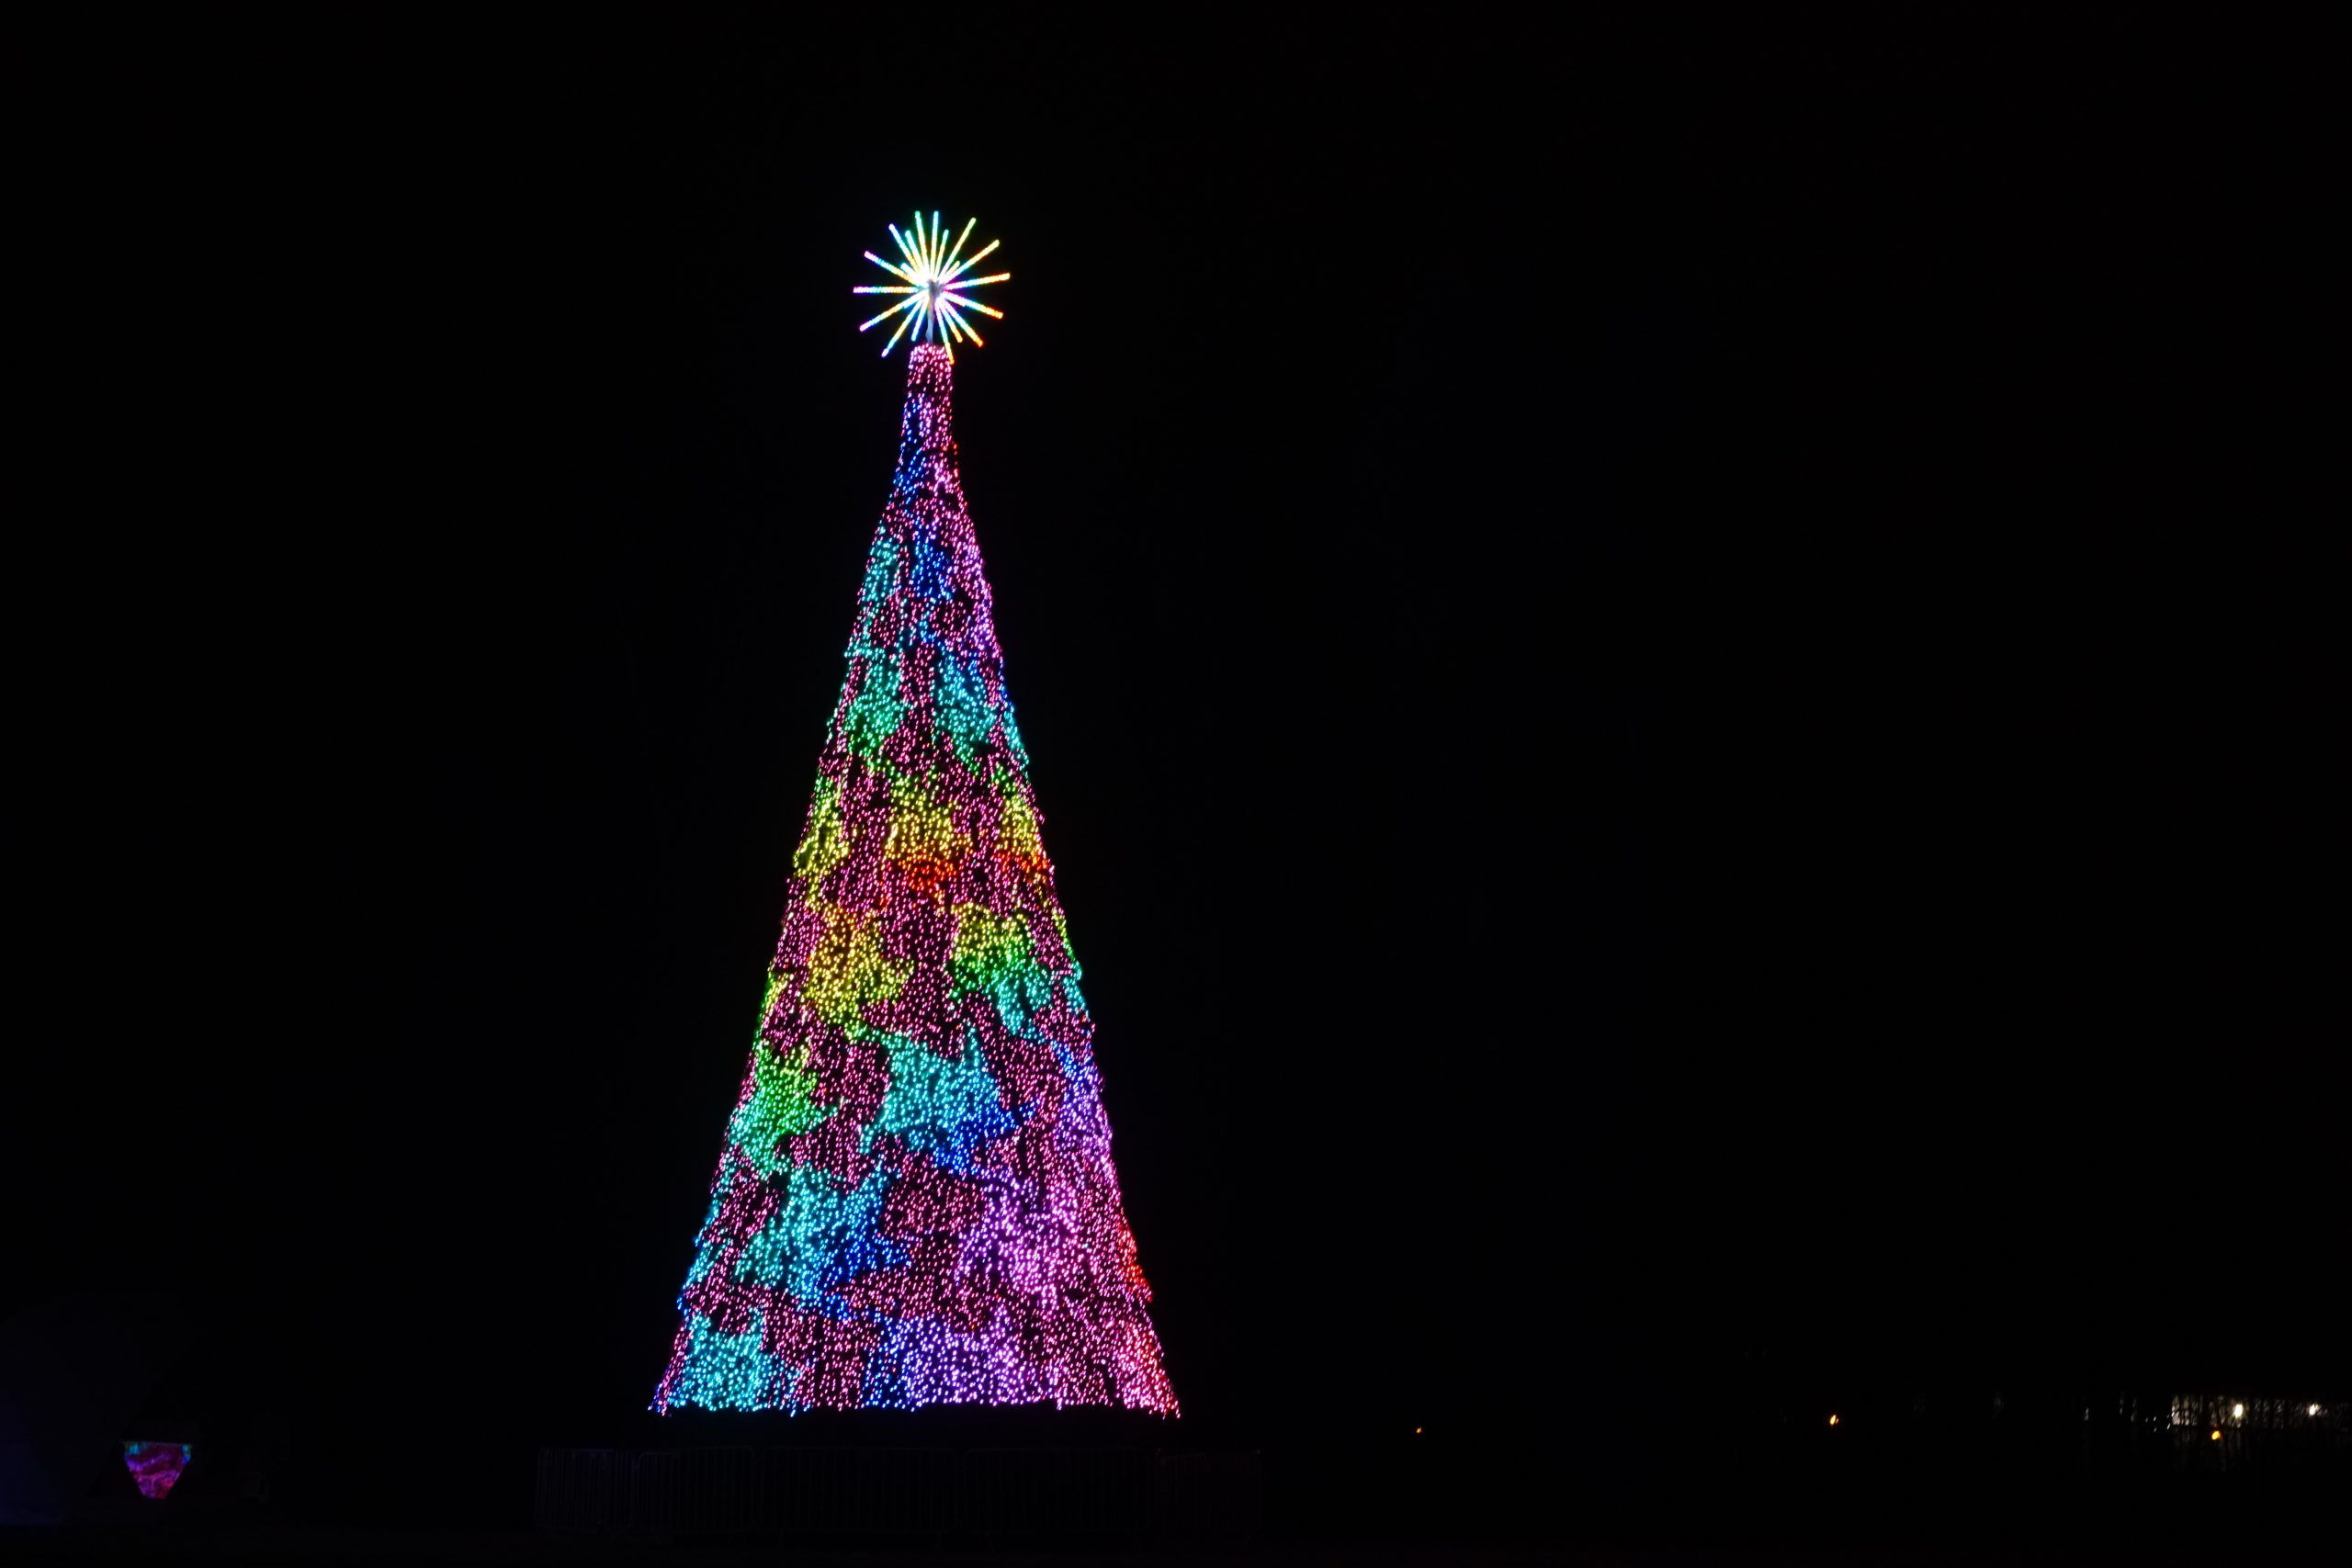 Musical Christmas tree at the Dallas Arboretum